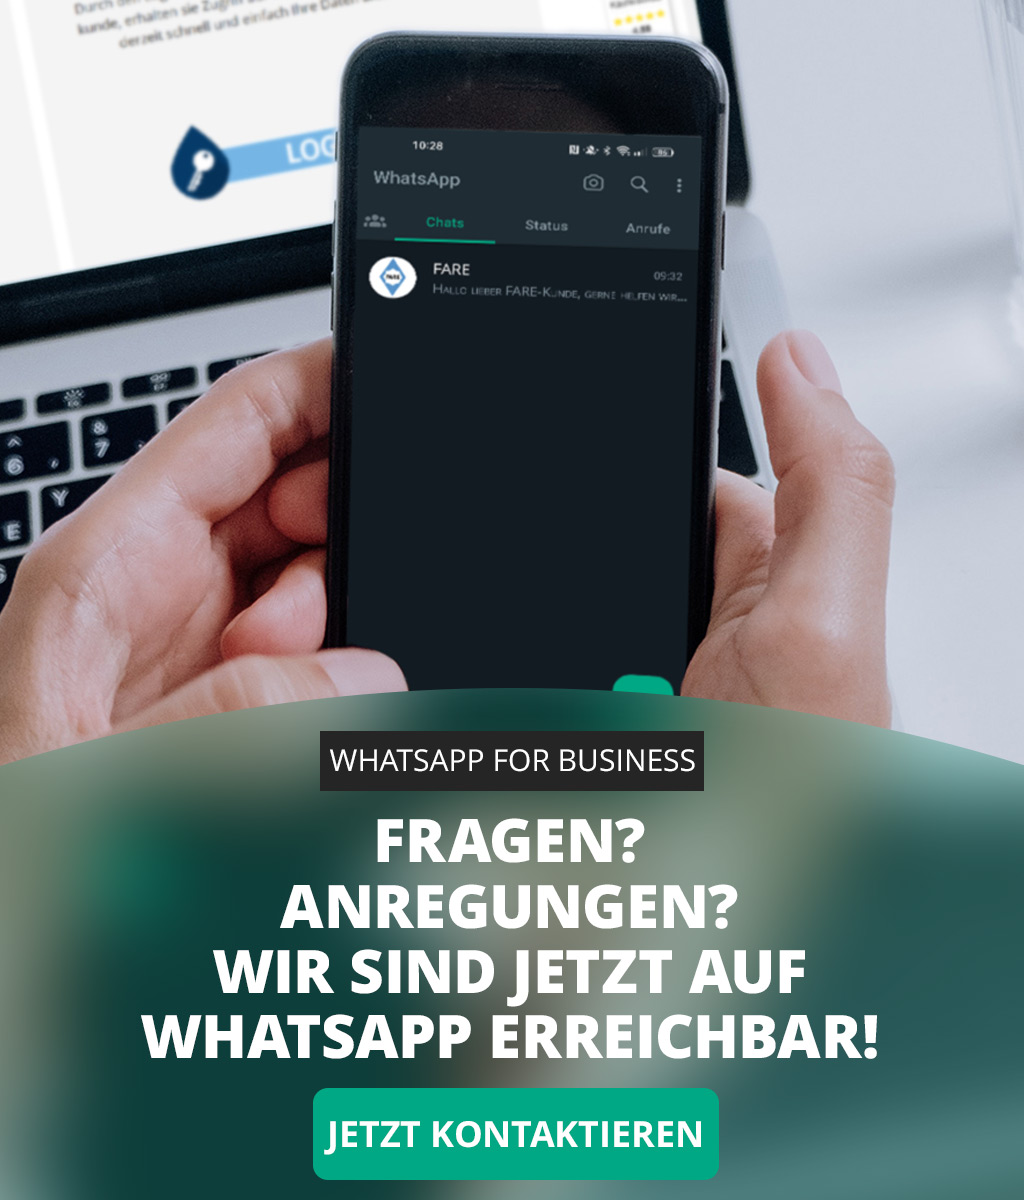 FARE WhatsApp for Business